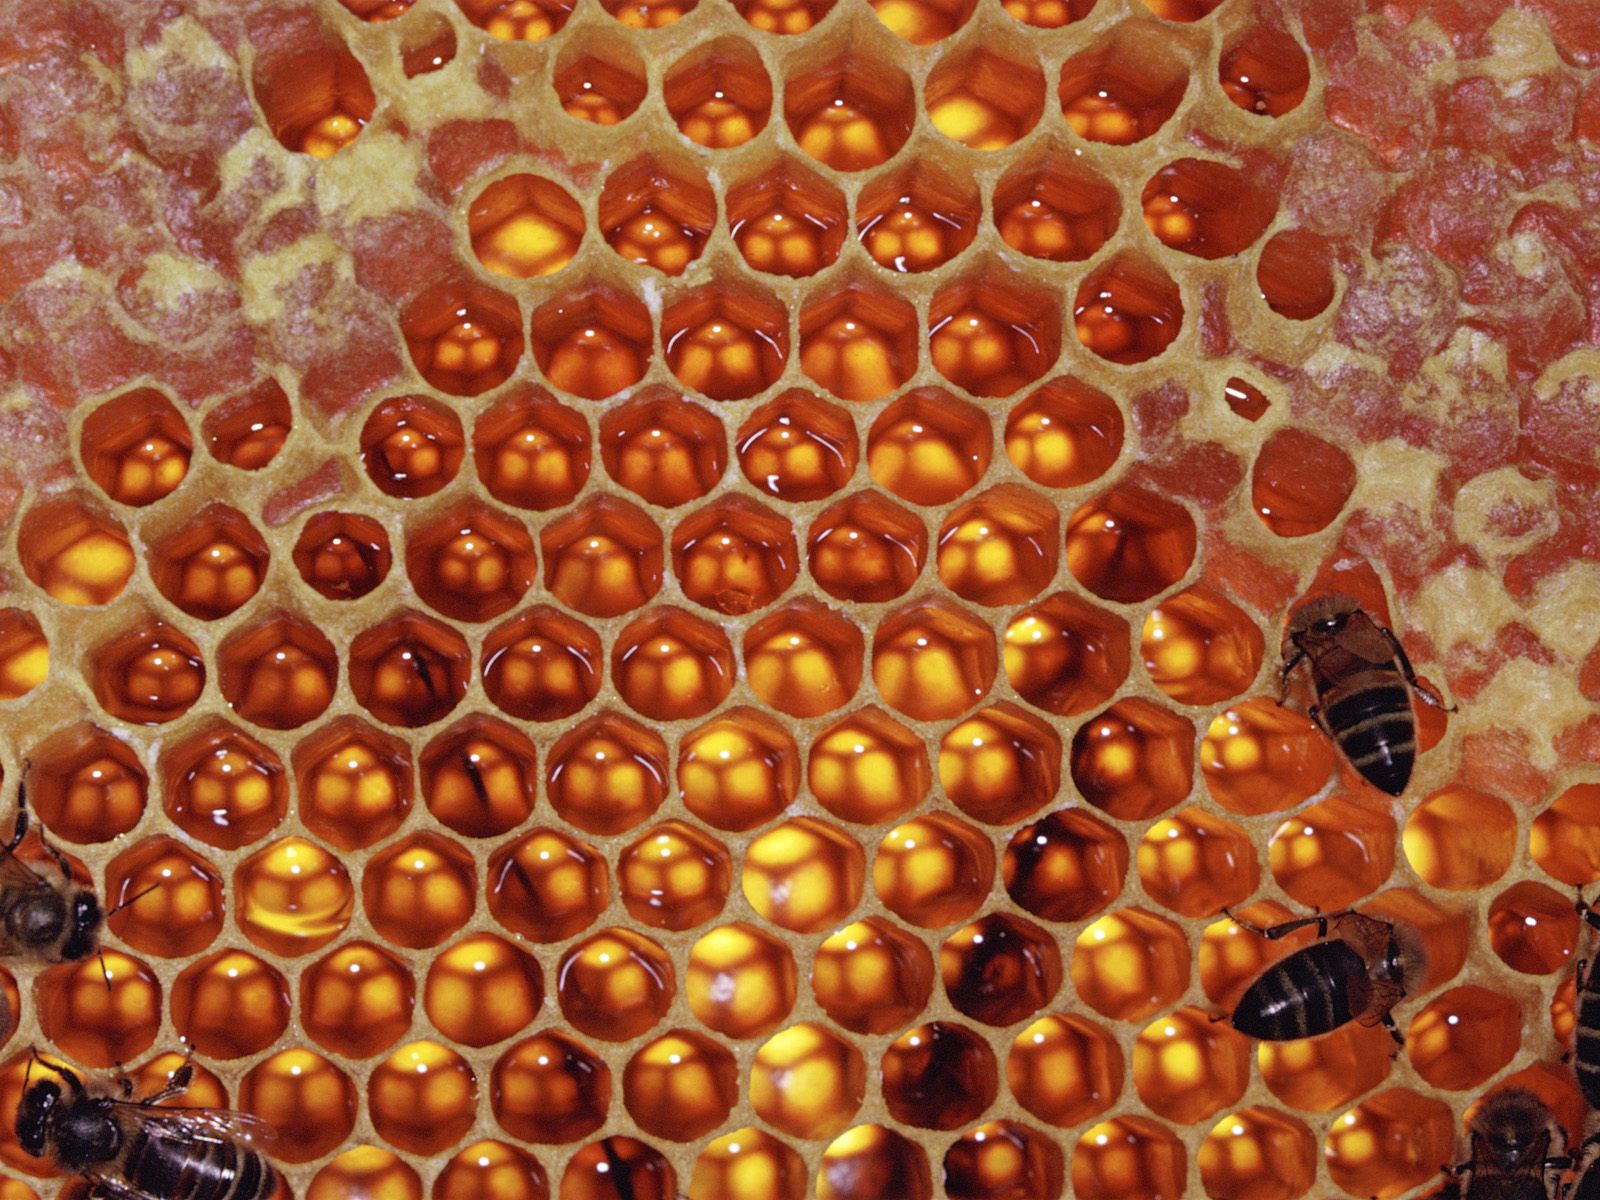 Honeycomb_1600x1200